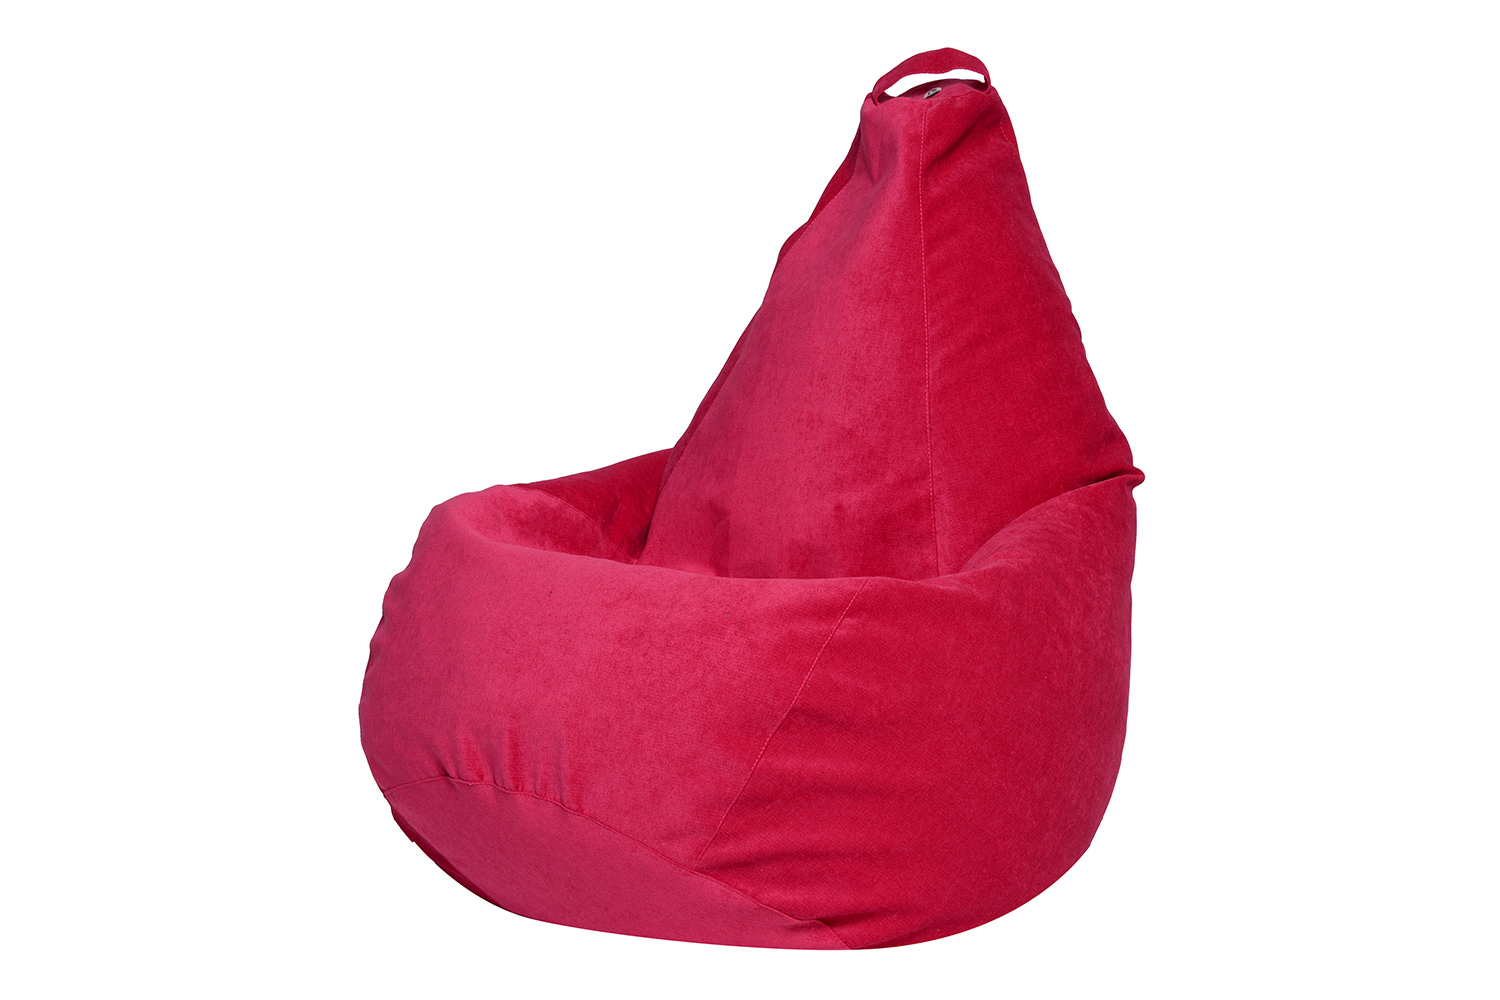 Кресло-мешок Bean-Bag груша, велюр натуральный, размер XXXXL